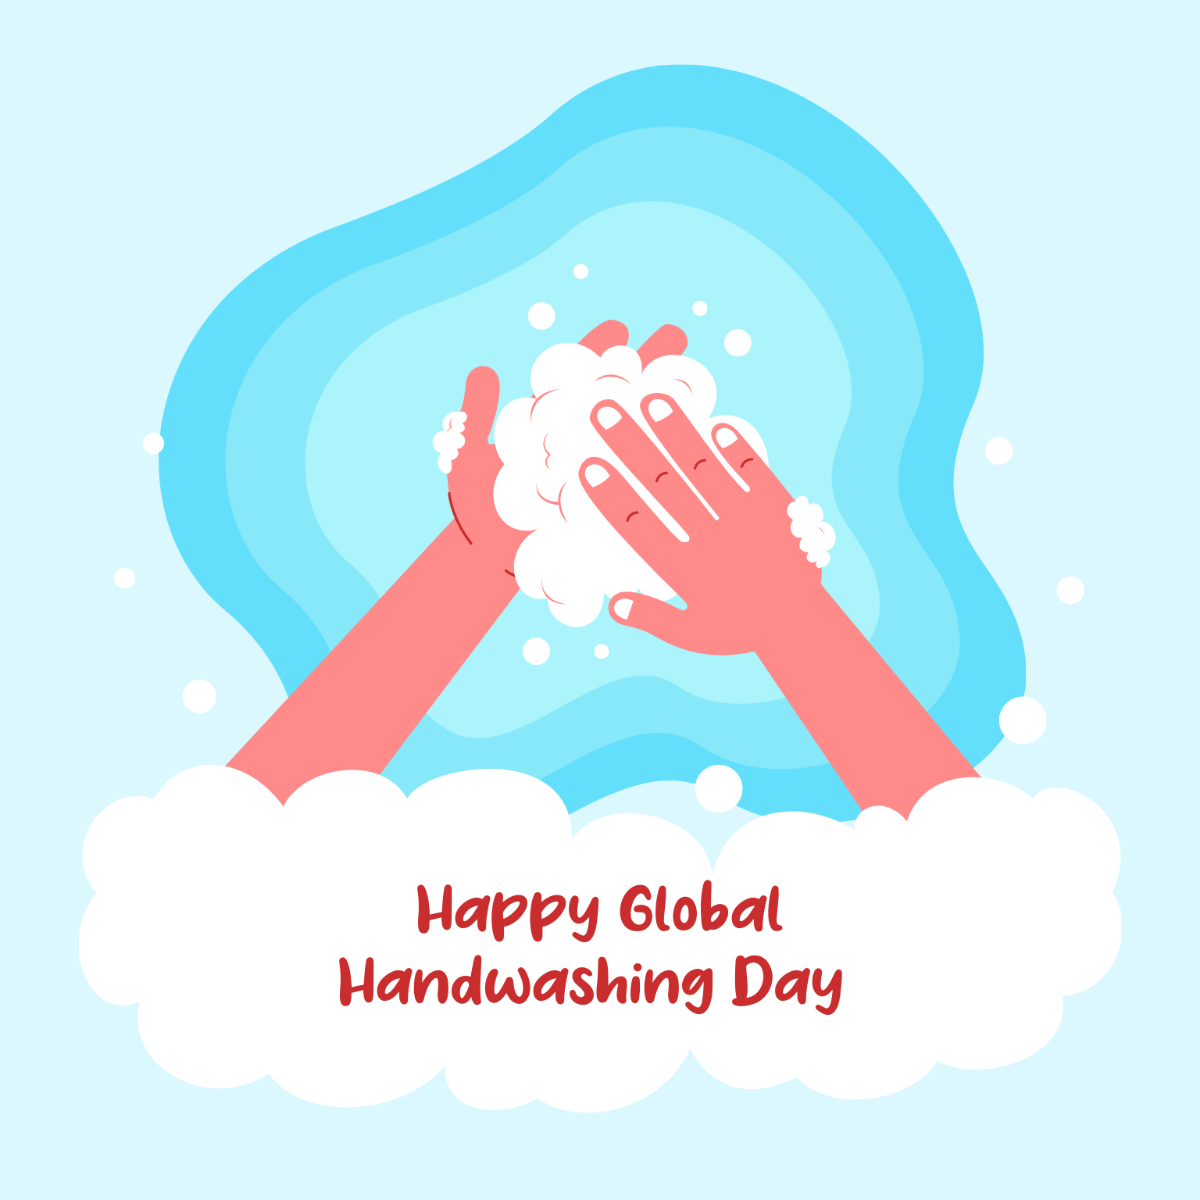 Free Happy Global Handwashing Day Vector Template